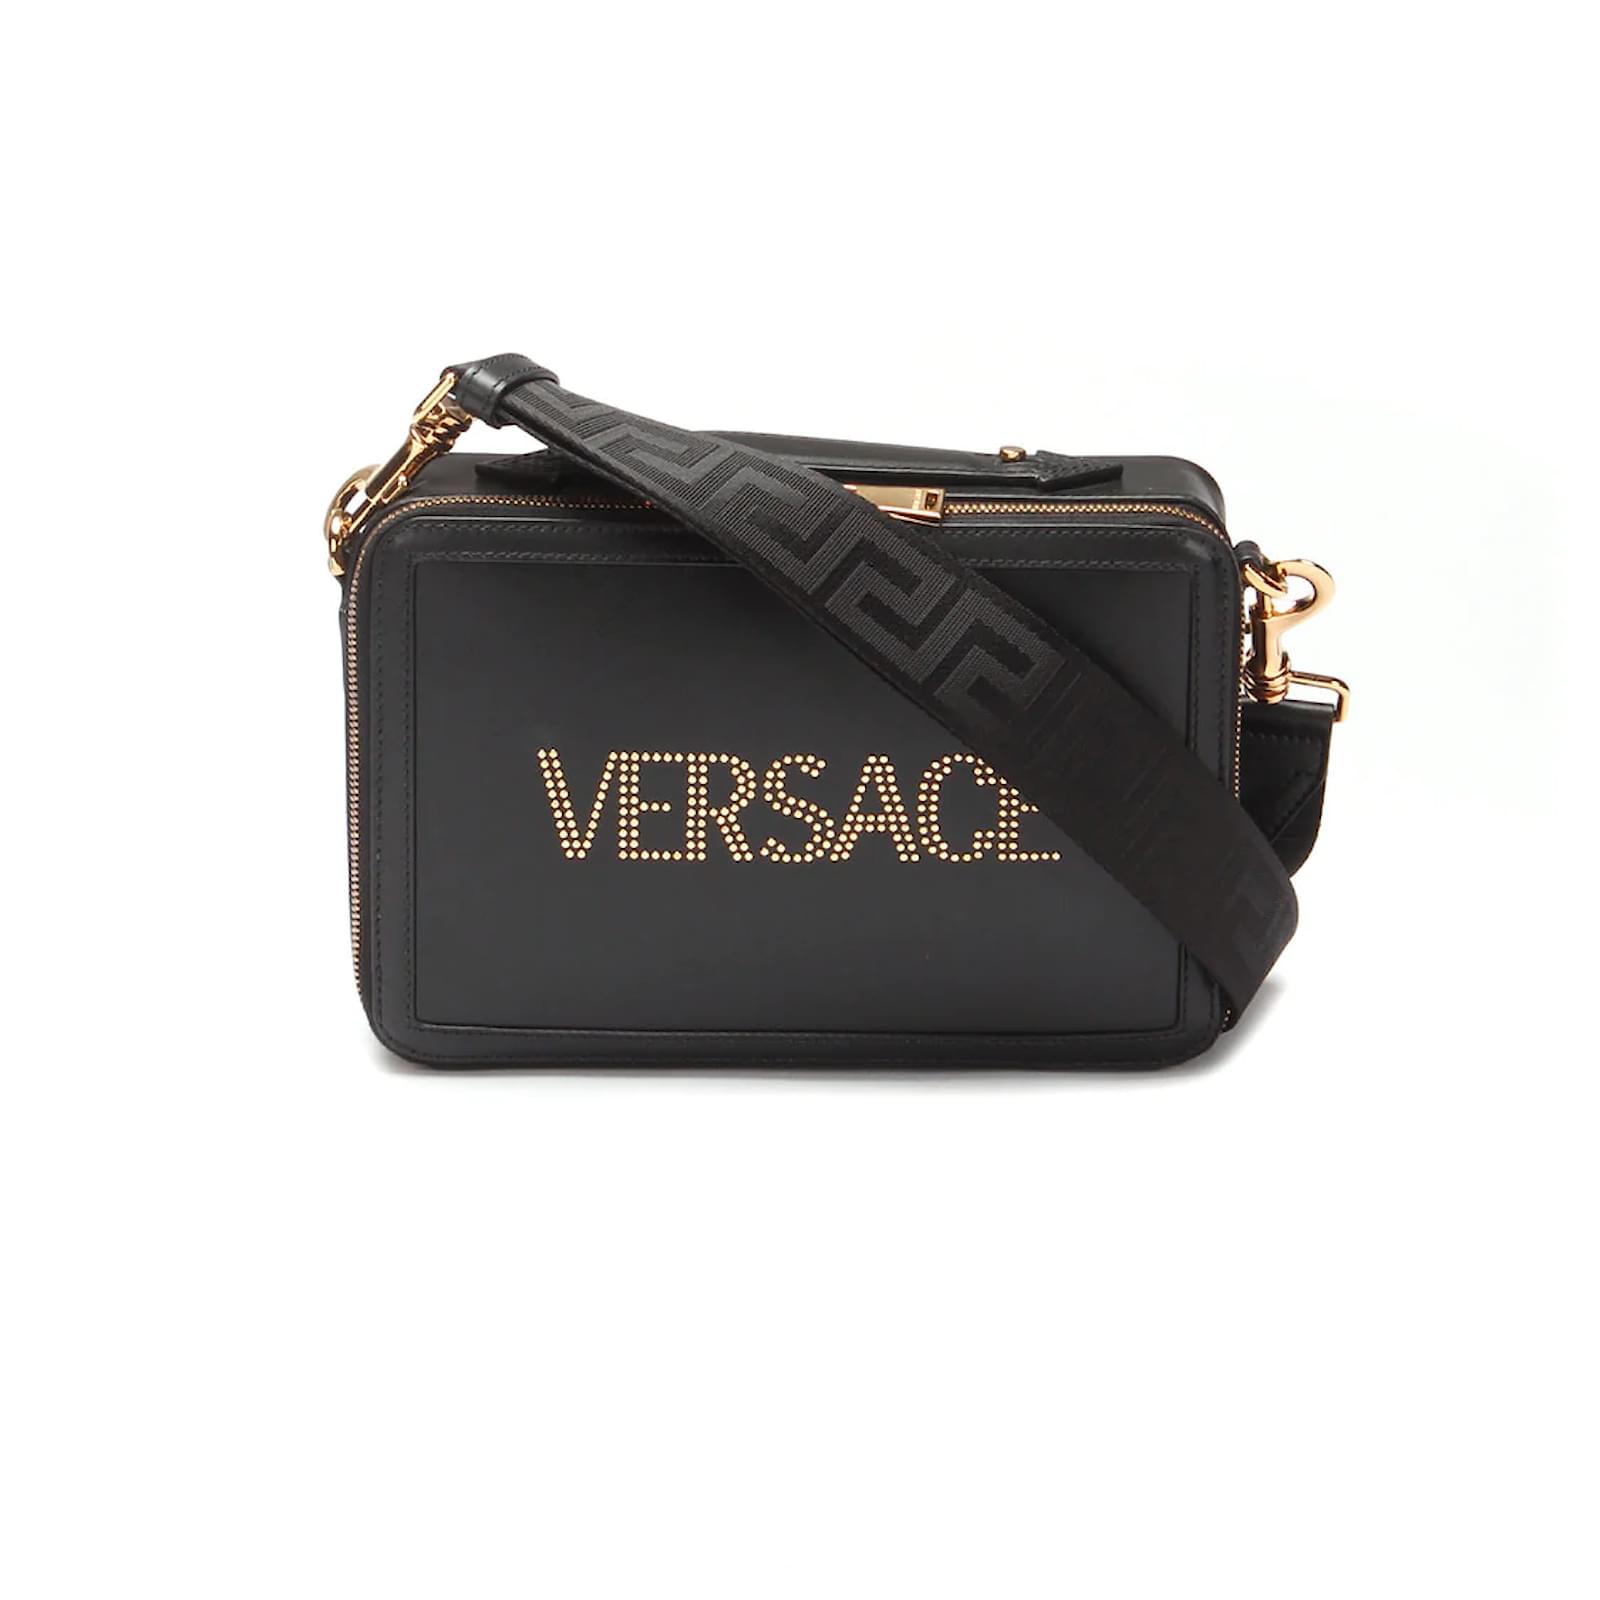 Versace Medusa Foldover Crossbody Bag in Black